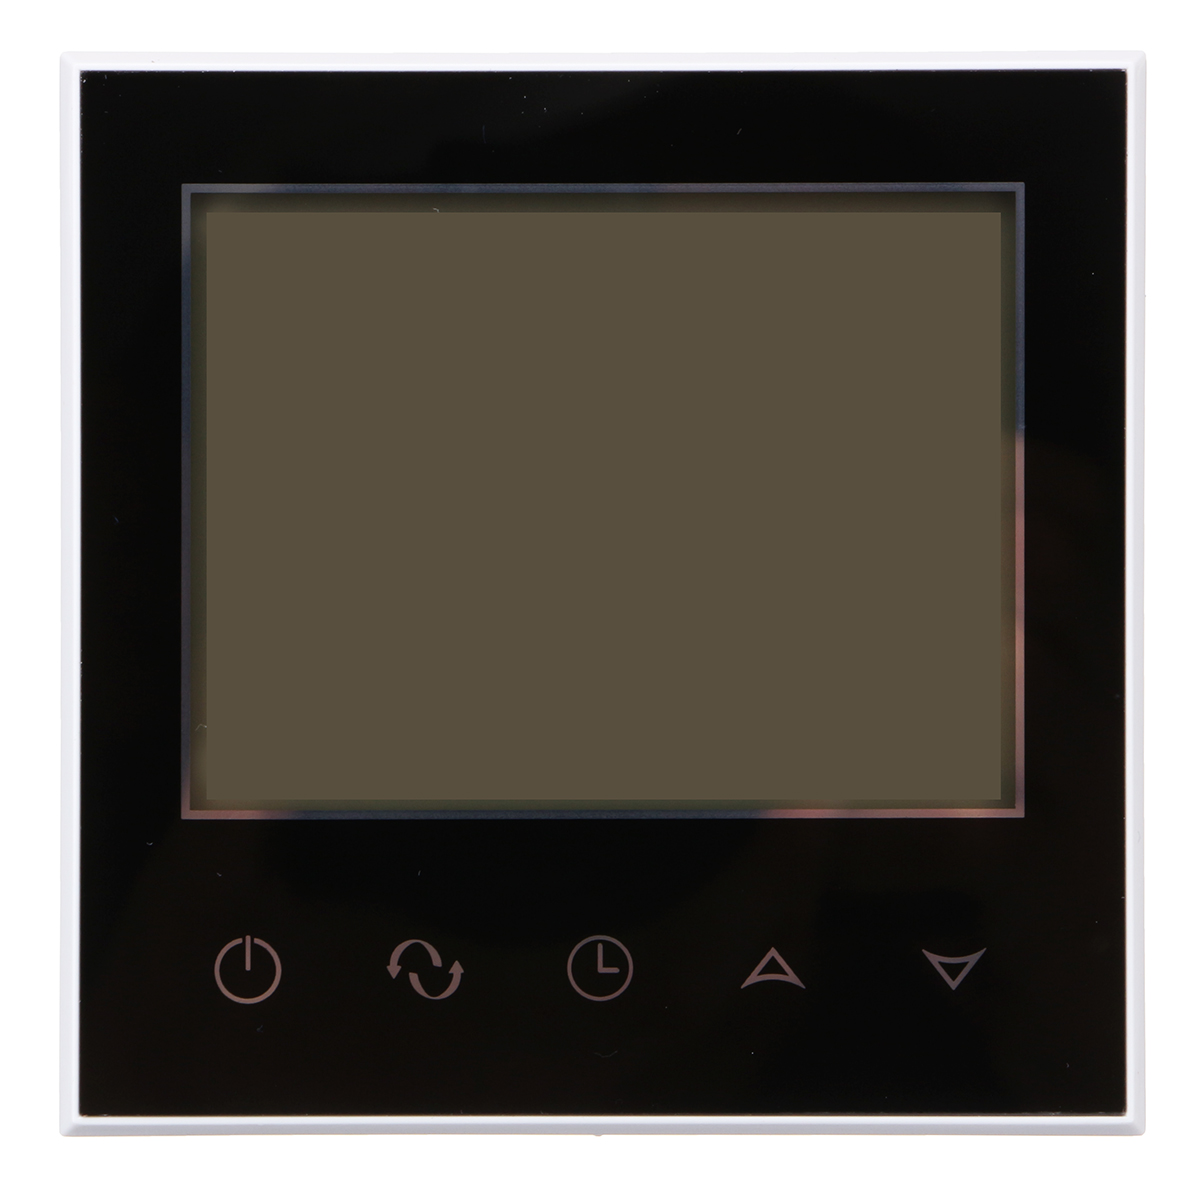 

16A WIFI LCD Wireless Smart Programmable Thermostat Underfloor Heating App Control